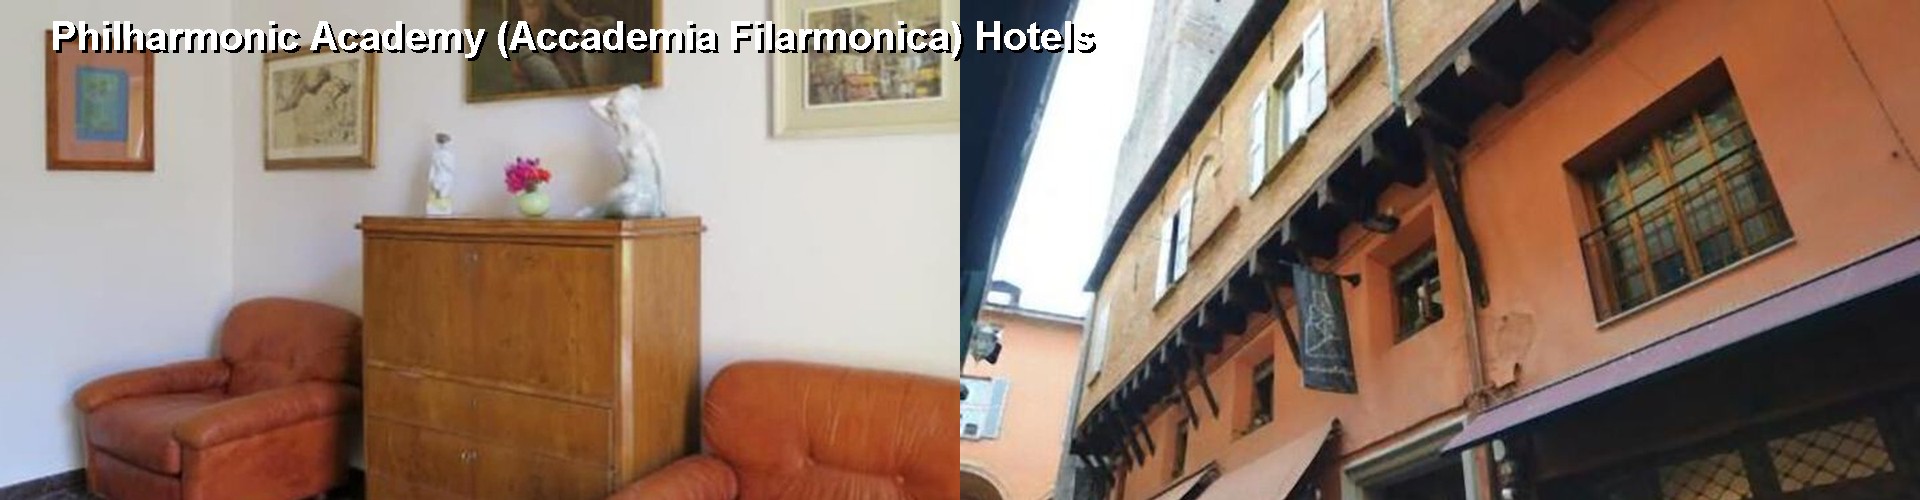 5 Best Hotels near Philharmonic Academy (Accademia Filarmonica)